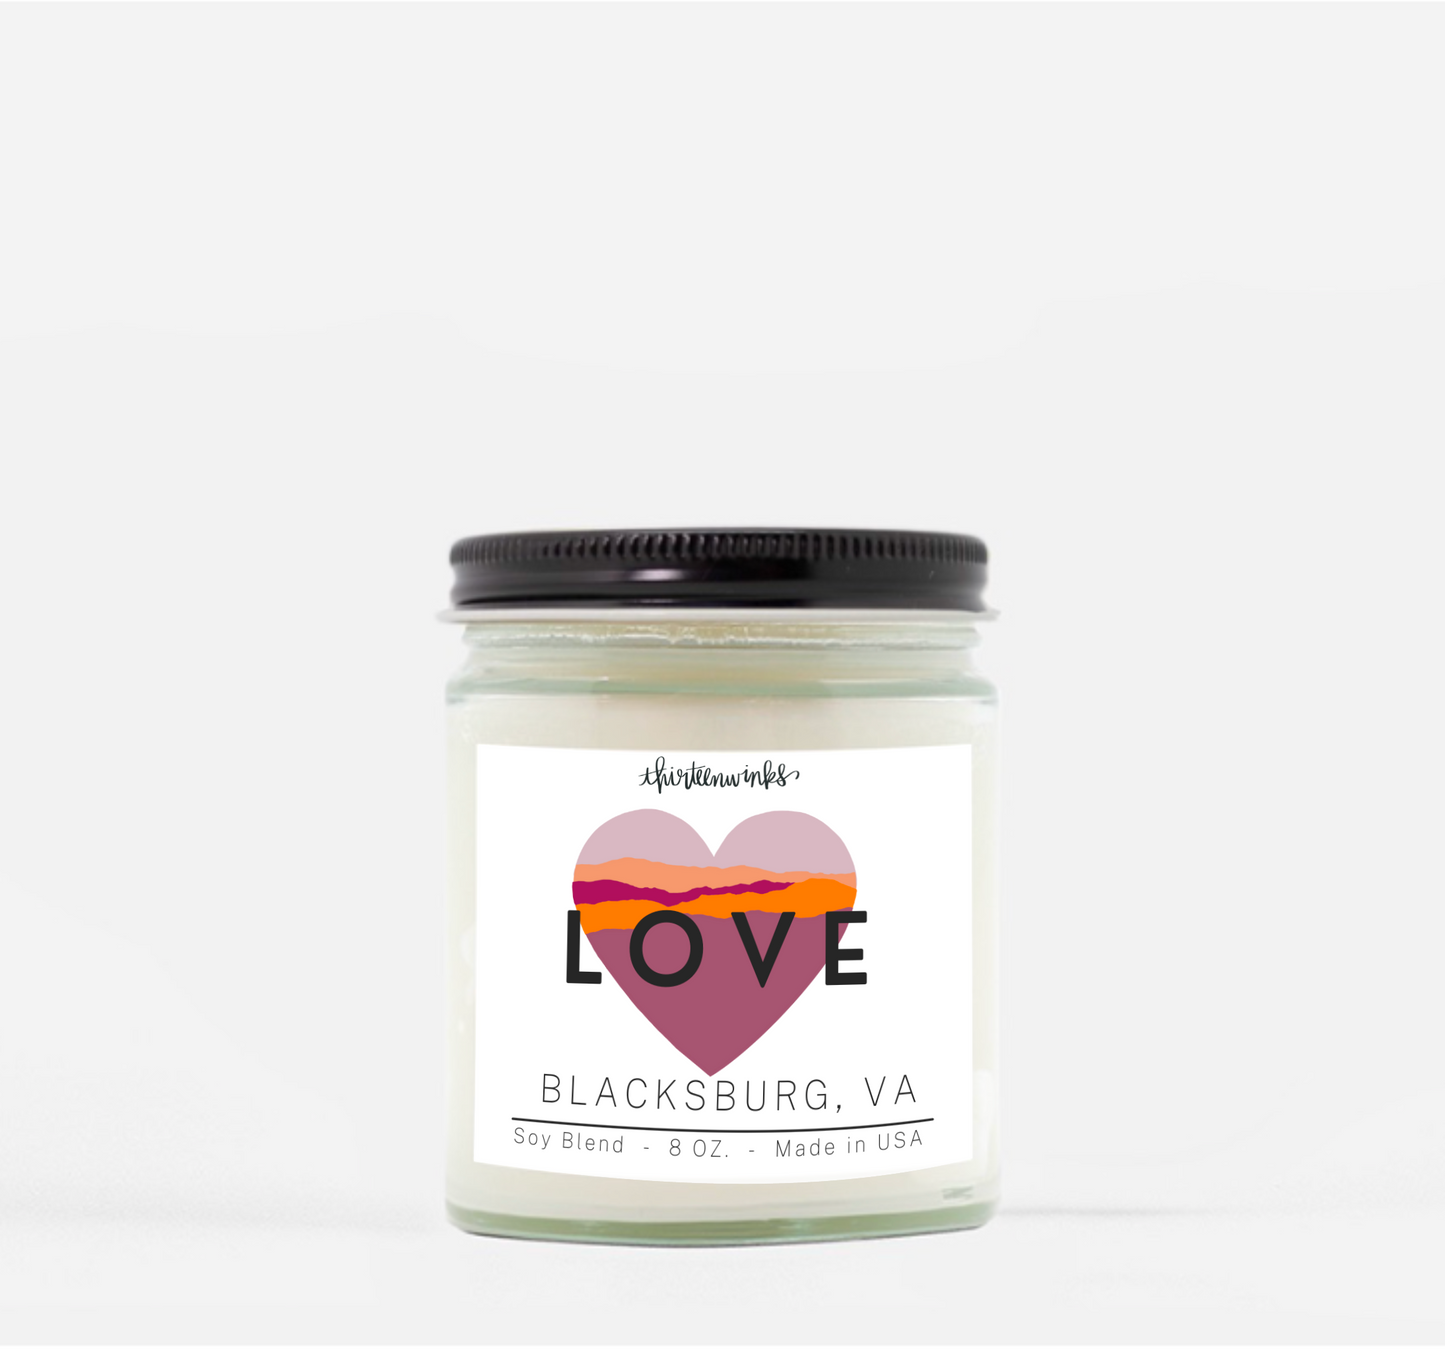 LOVE Blacksburg, Virginia candle